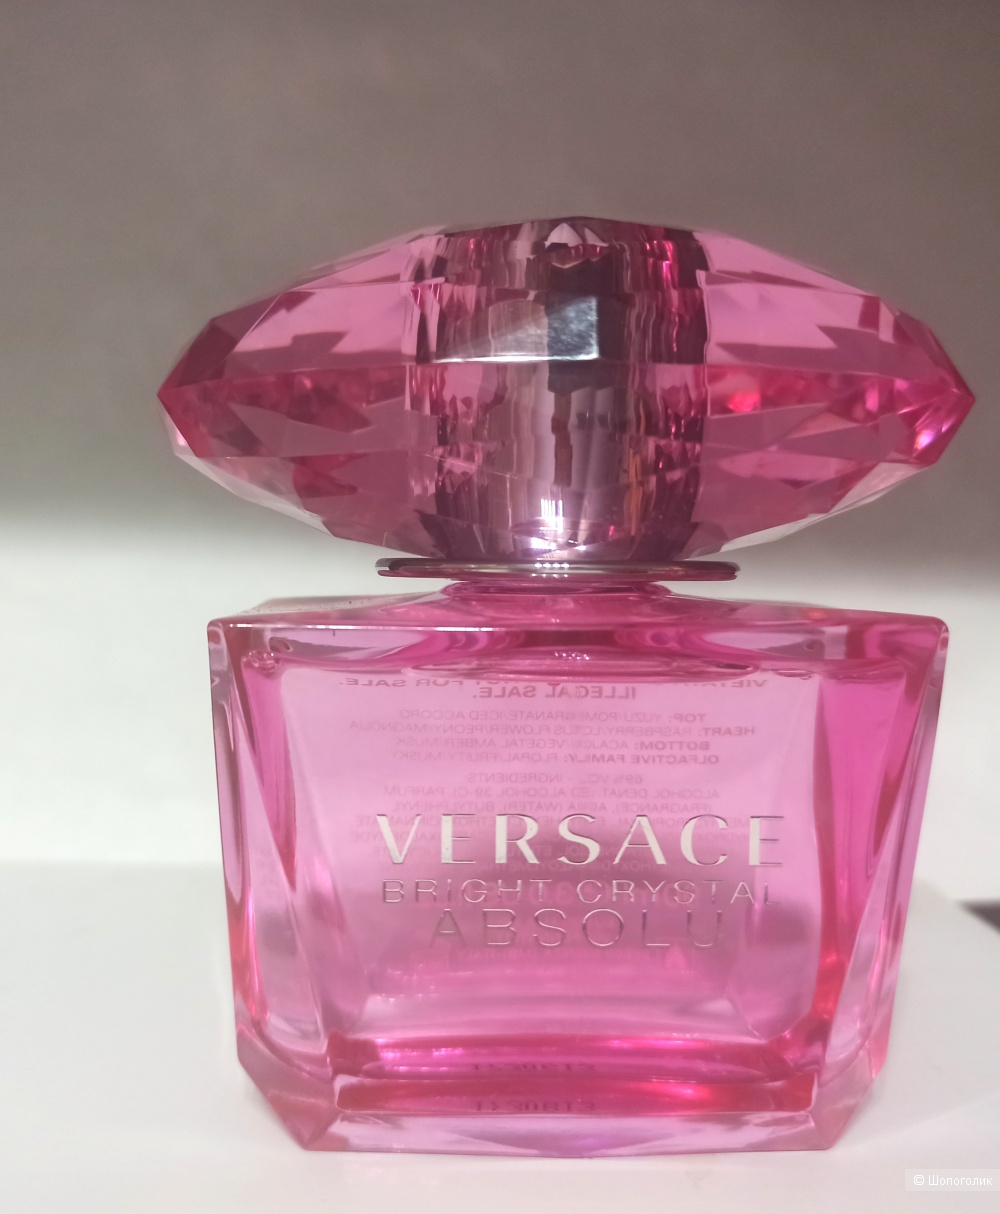 Versace bright crystal ABSOLU edp 90 ml